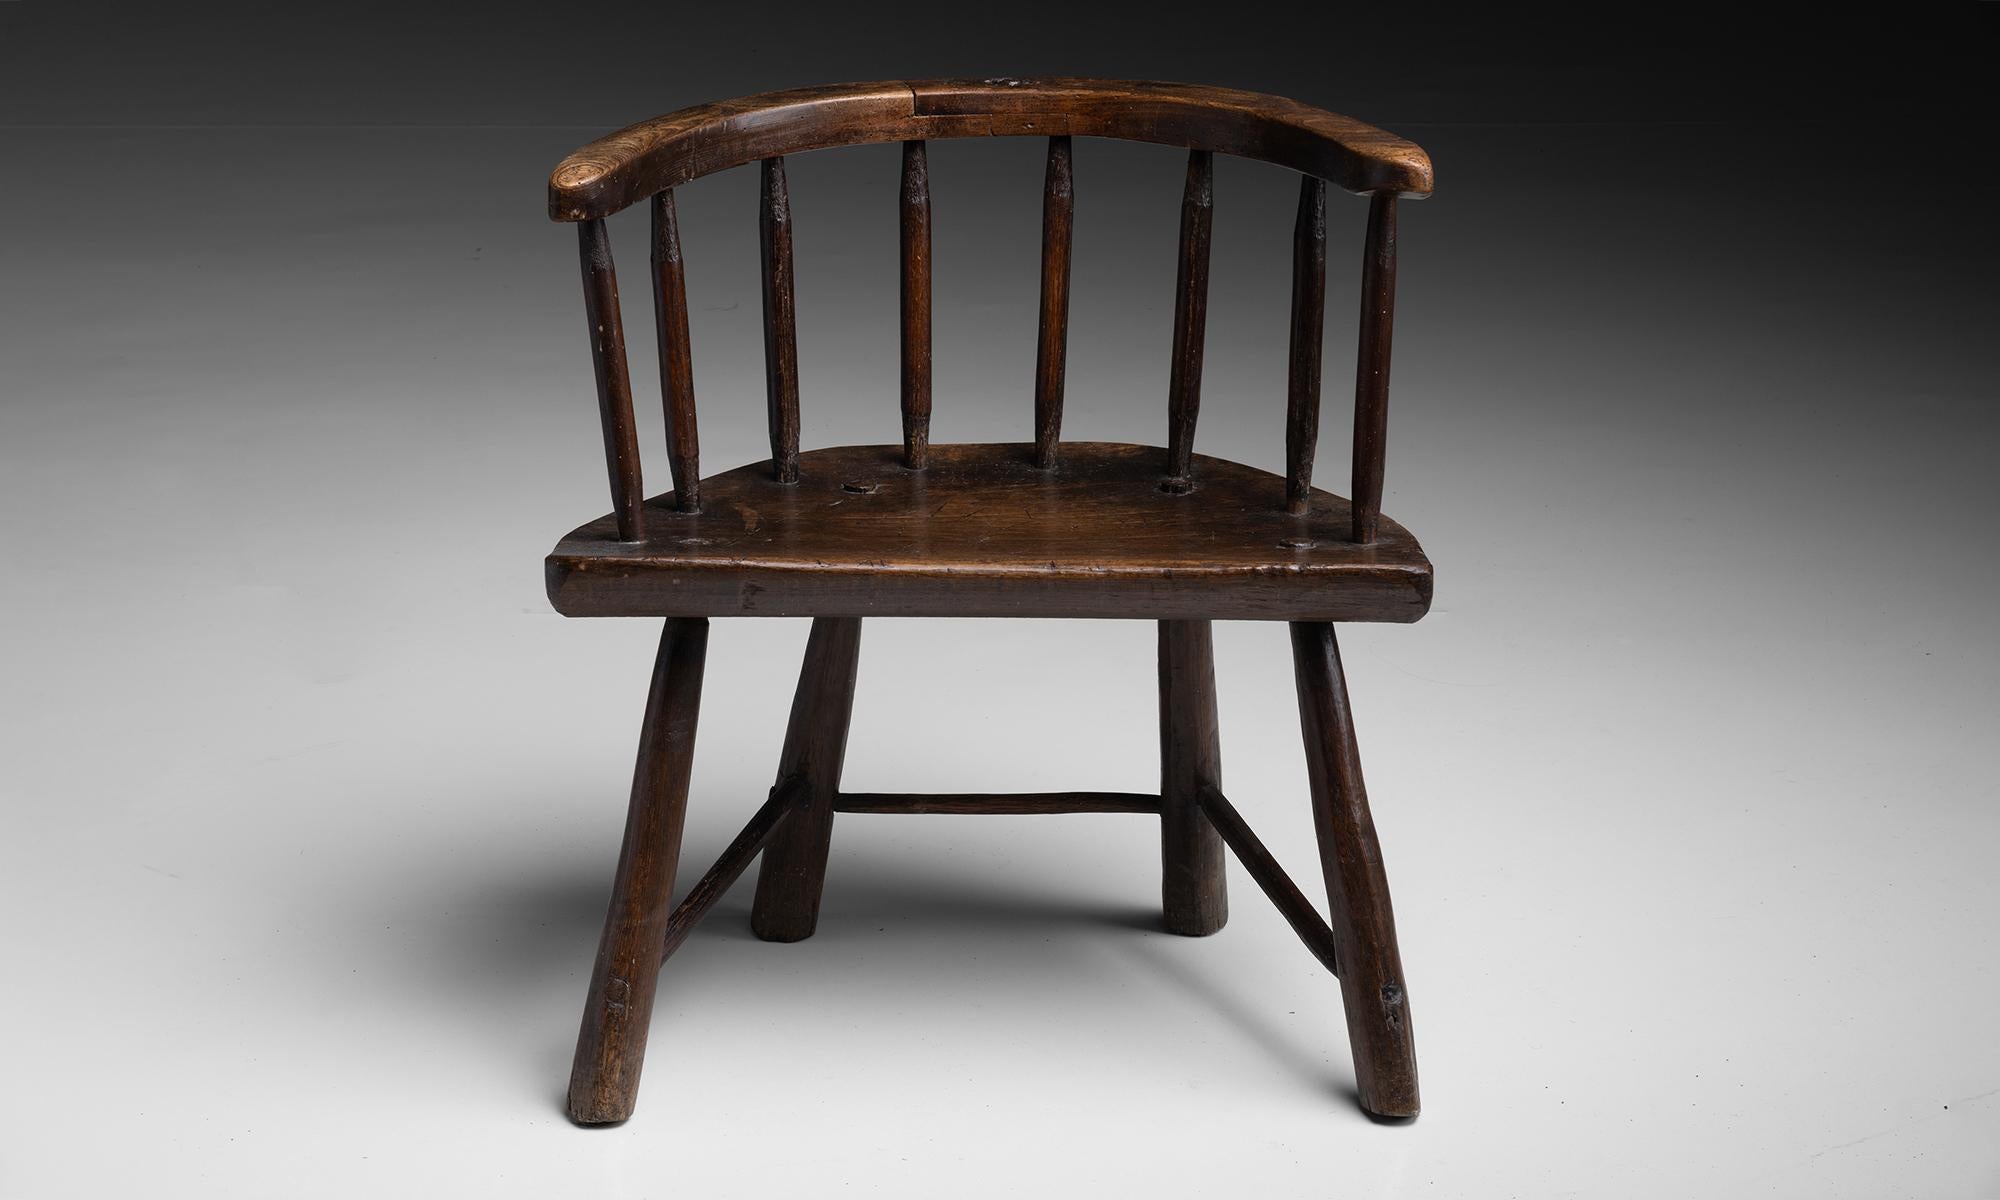 Primitive Stickback Chair, England, circa 1840

Measures 24.25”w x 15”d x 26”h x 16”seat.